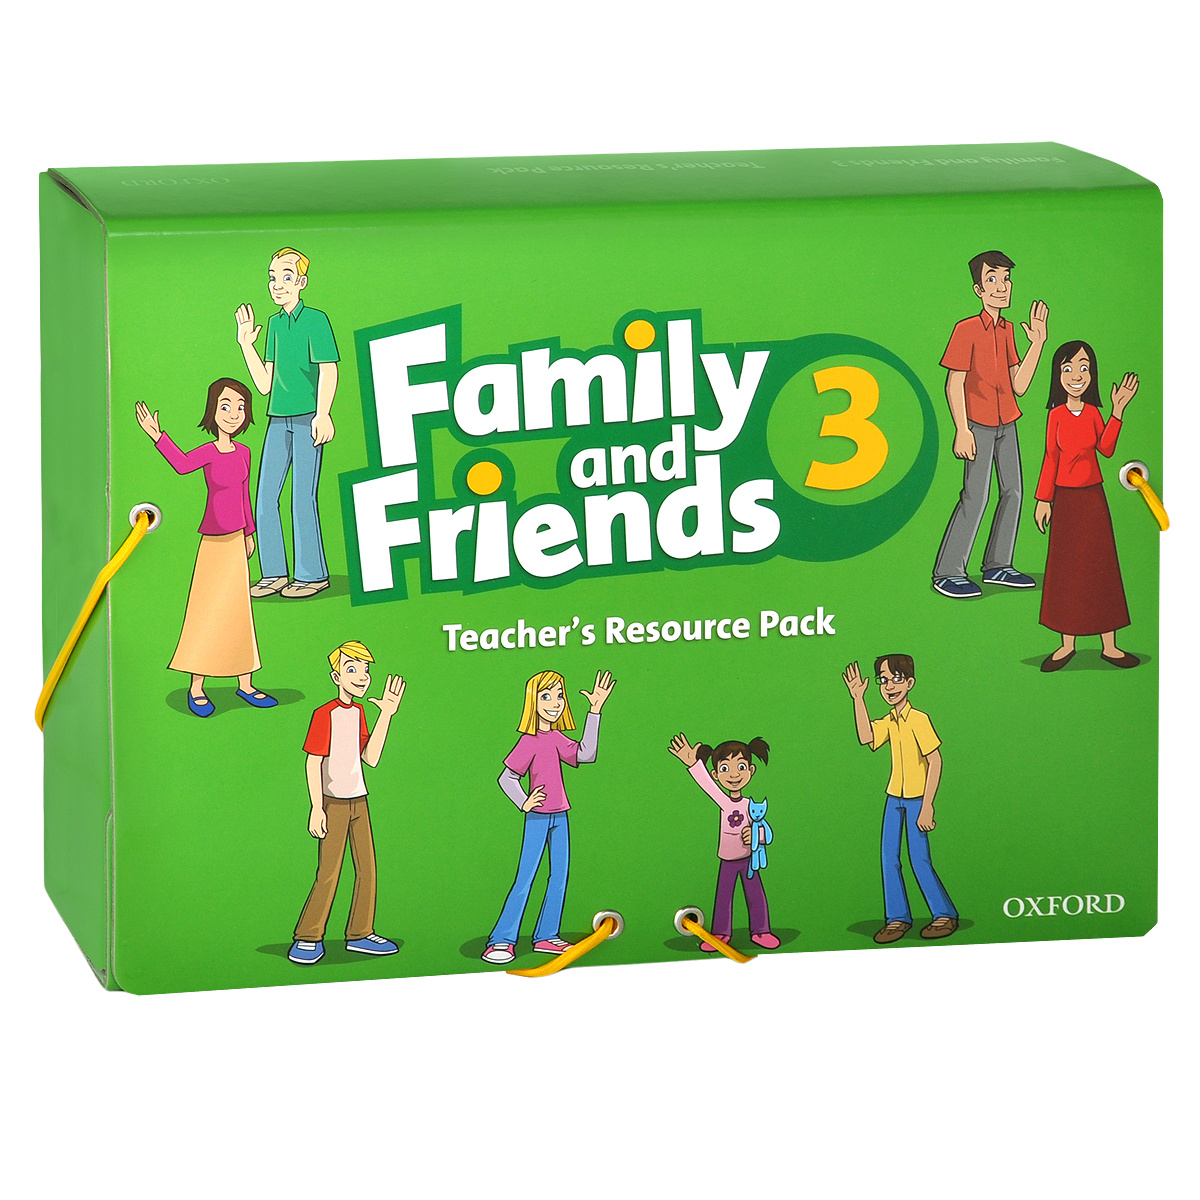 Friends отзывы. Английский Family and friends 3. Oxford Family and friends 3. Фэмили френдс. Oxford Family and friends.